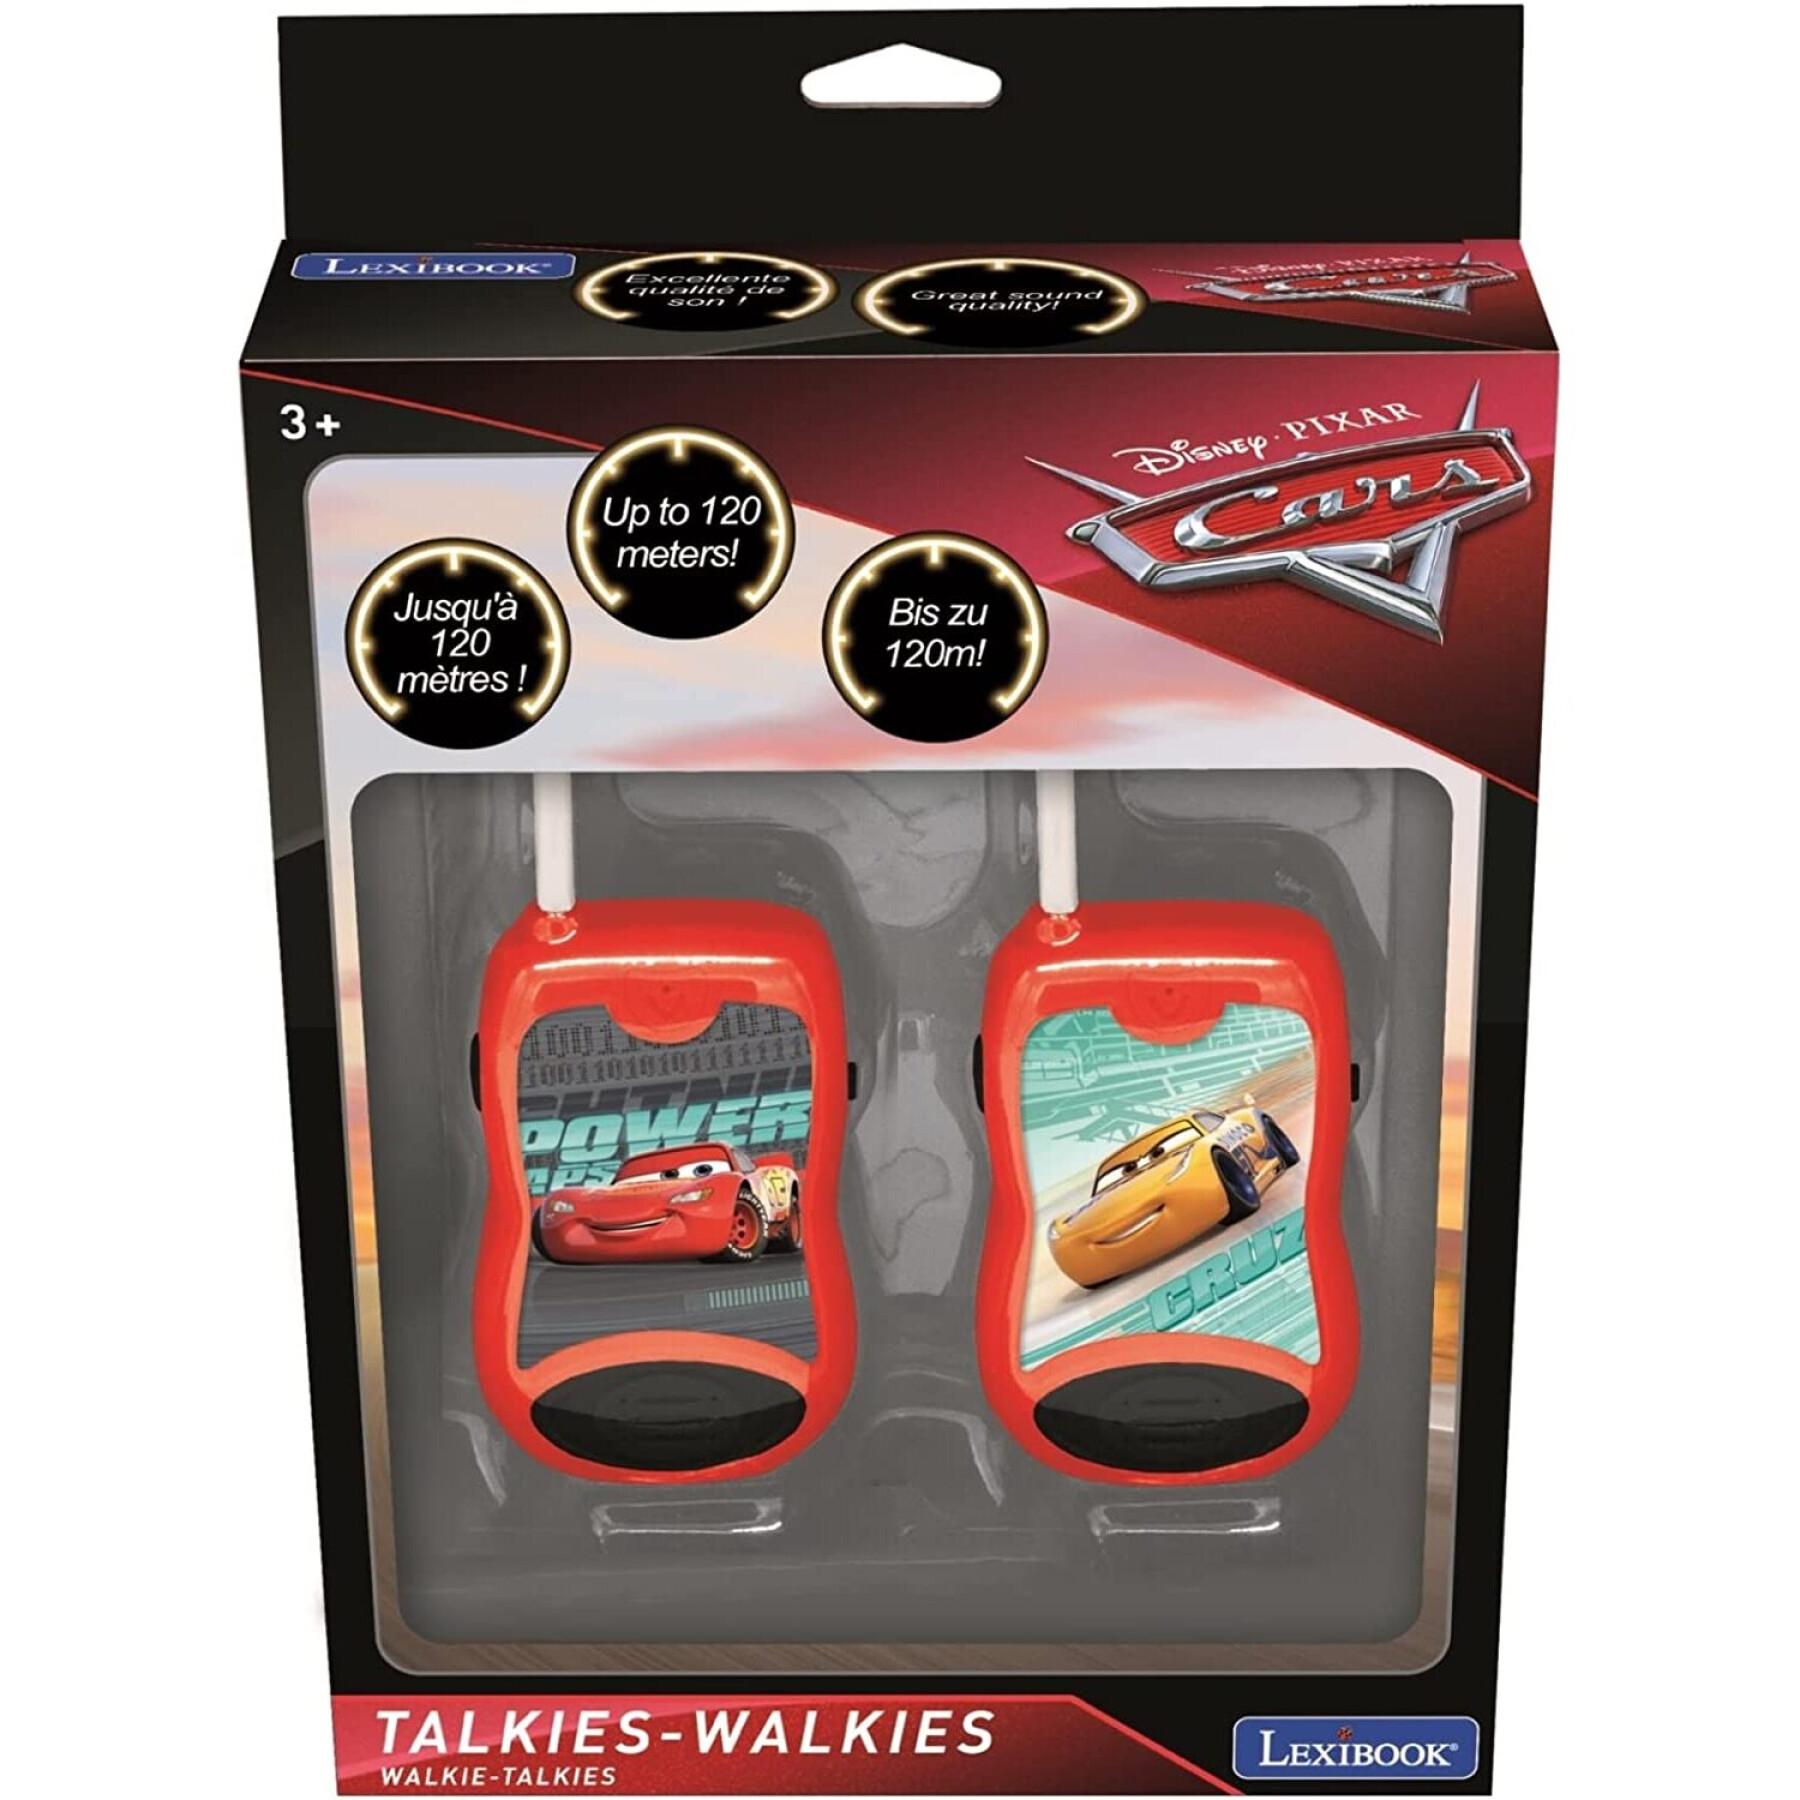 Coppia di walkie-talkie Lexibook Disney Cars 3